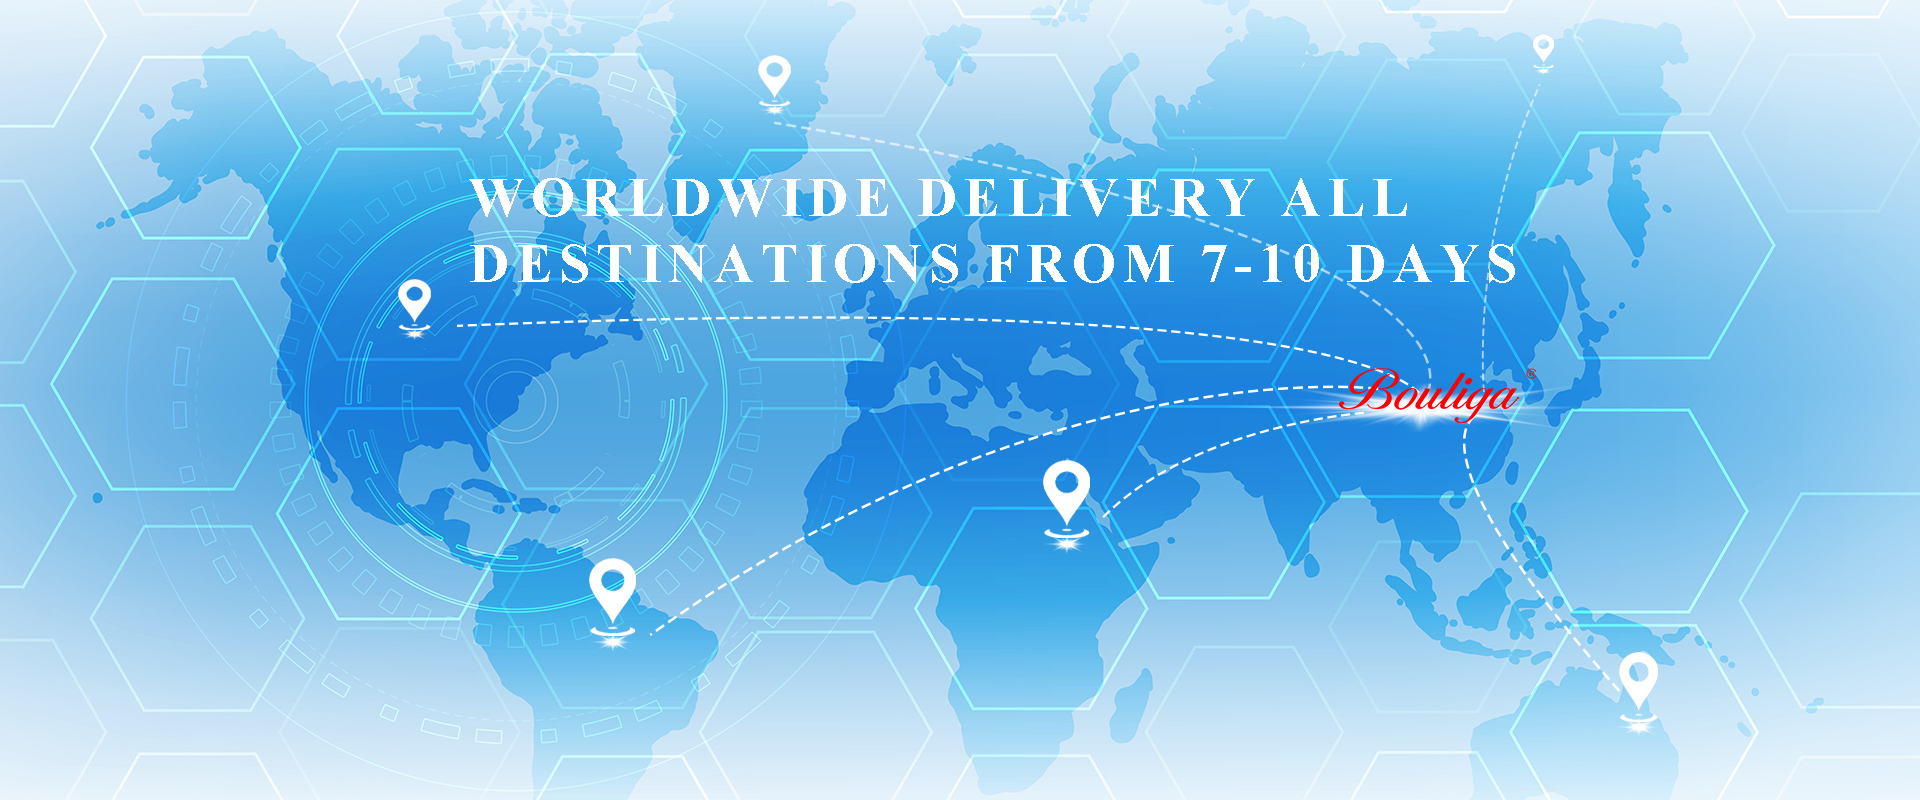 bouliga worldwide delivery